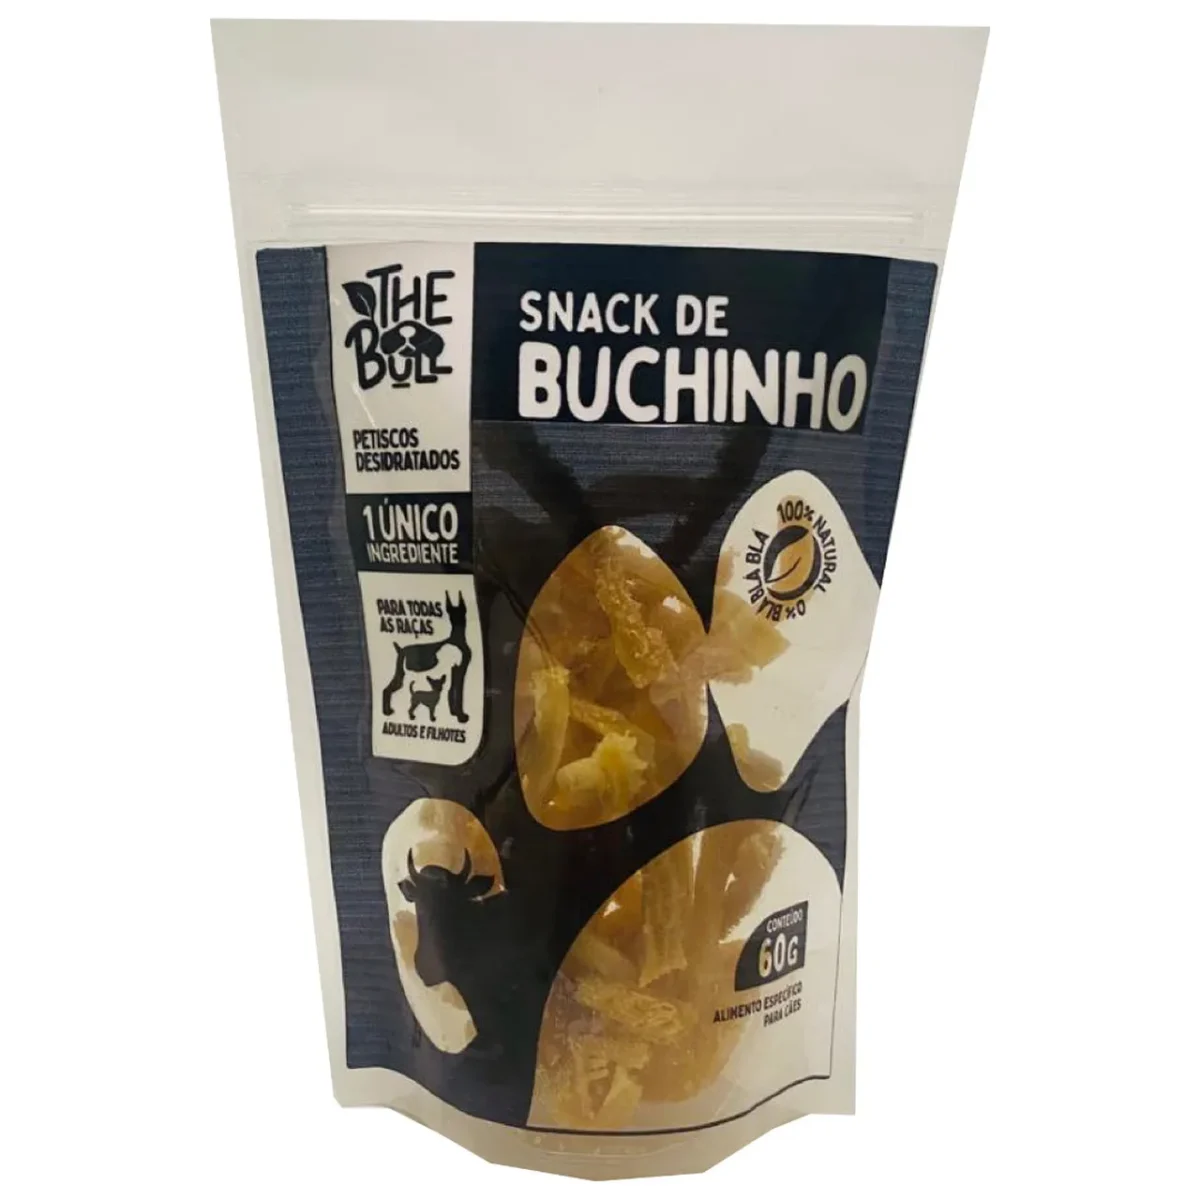 Snack Buchinho Bovino 60g - The Bull Petiscos 1